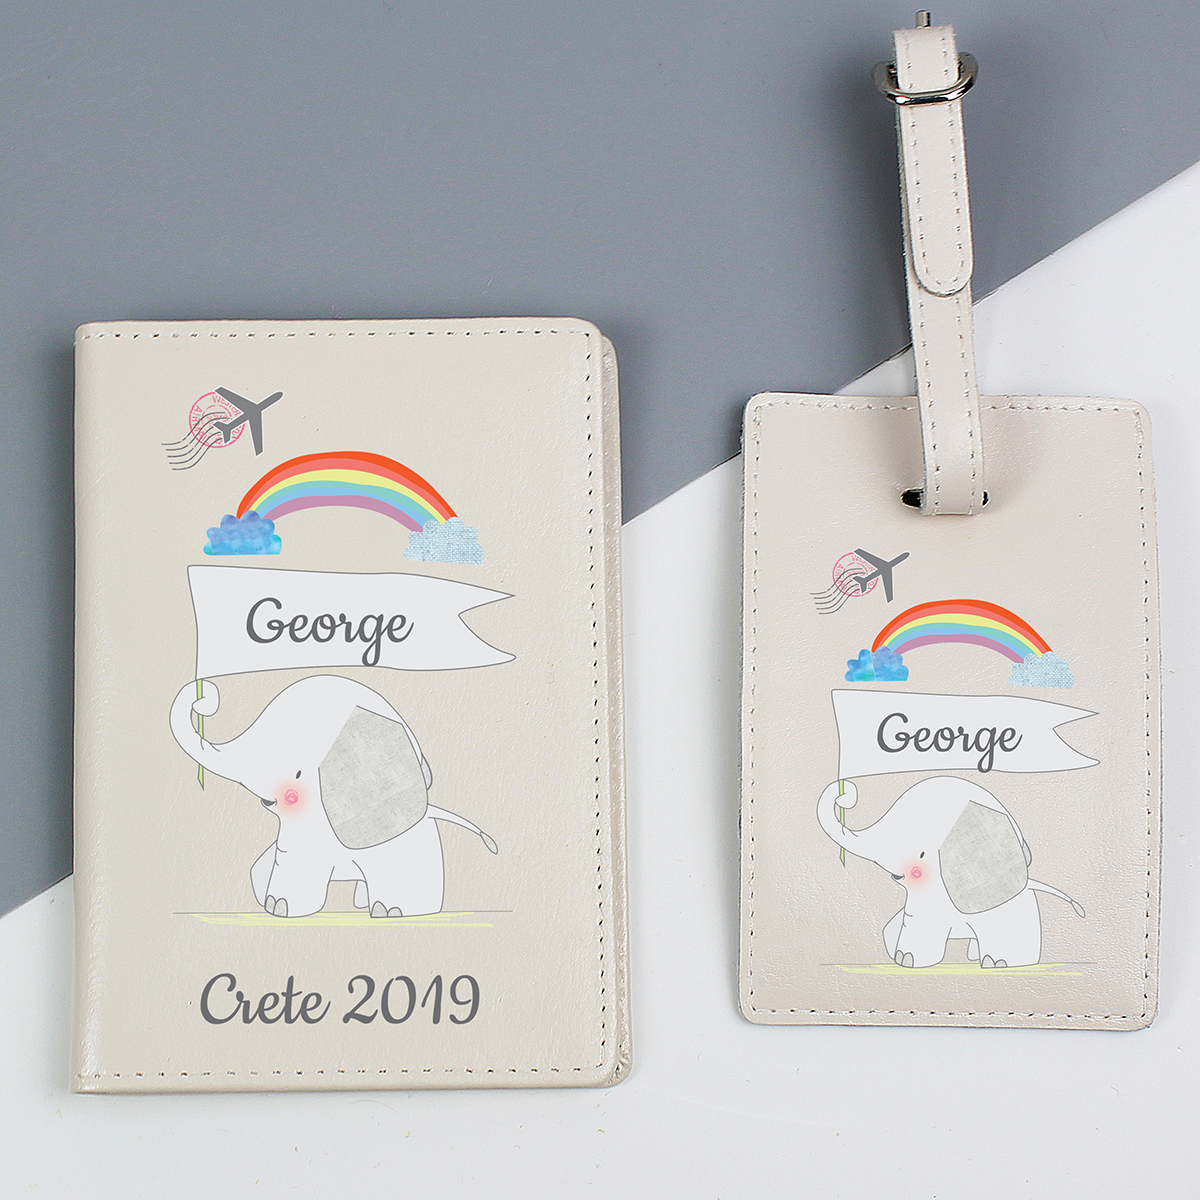 Personalised First Passport Holder & Luggage Tag Set - Elephant